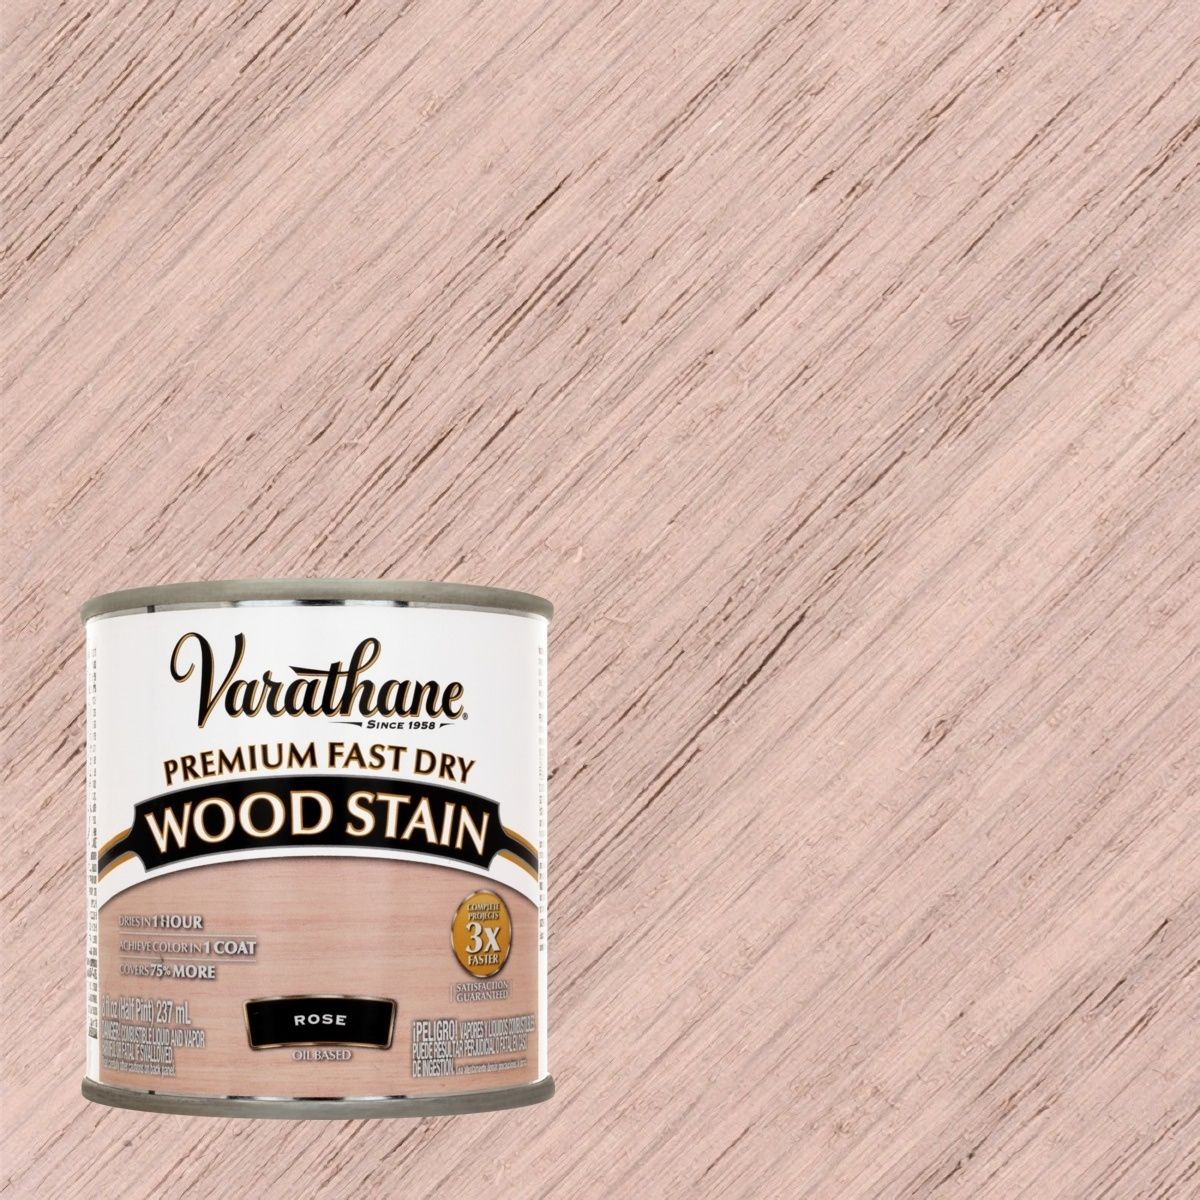 Varathane fast dry wood stain